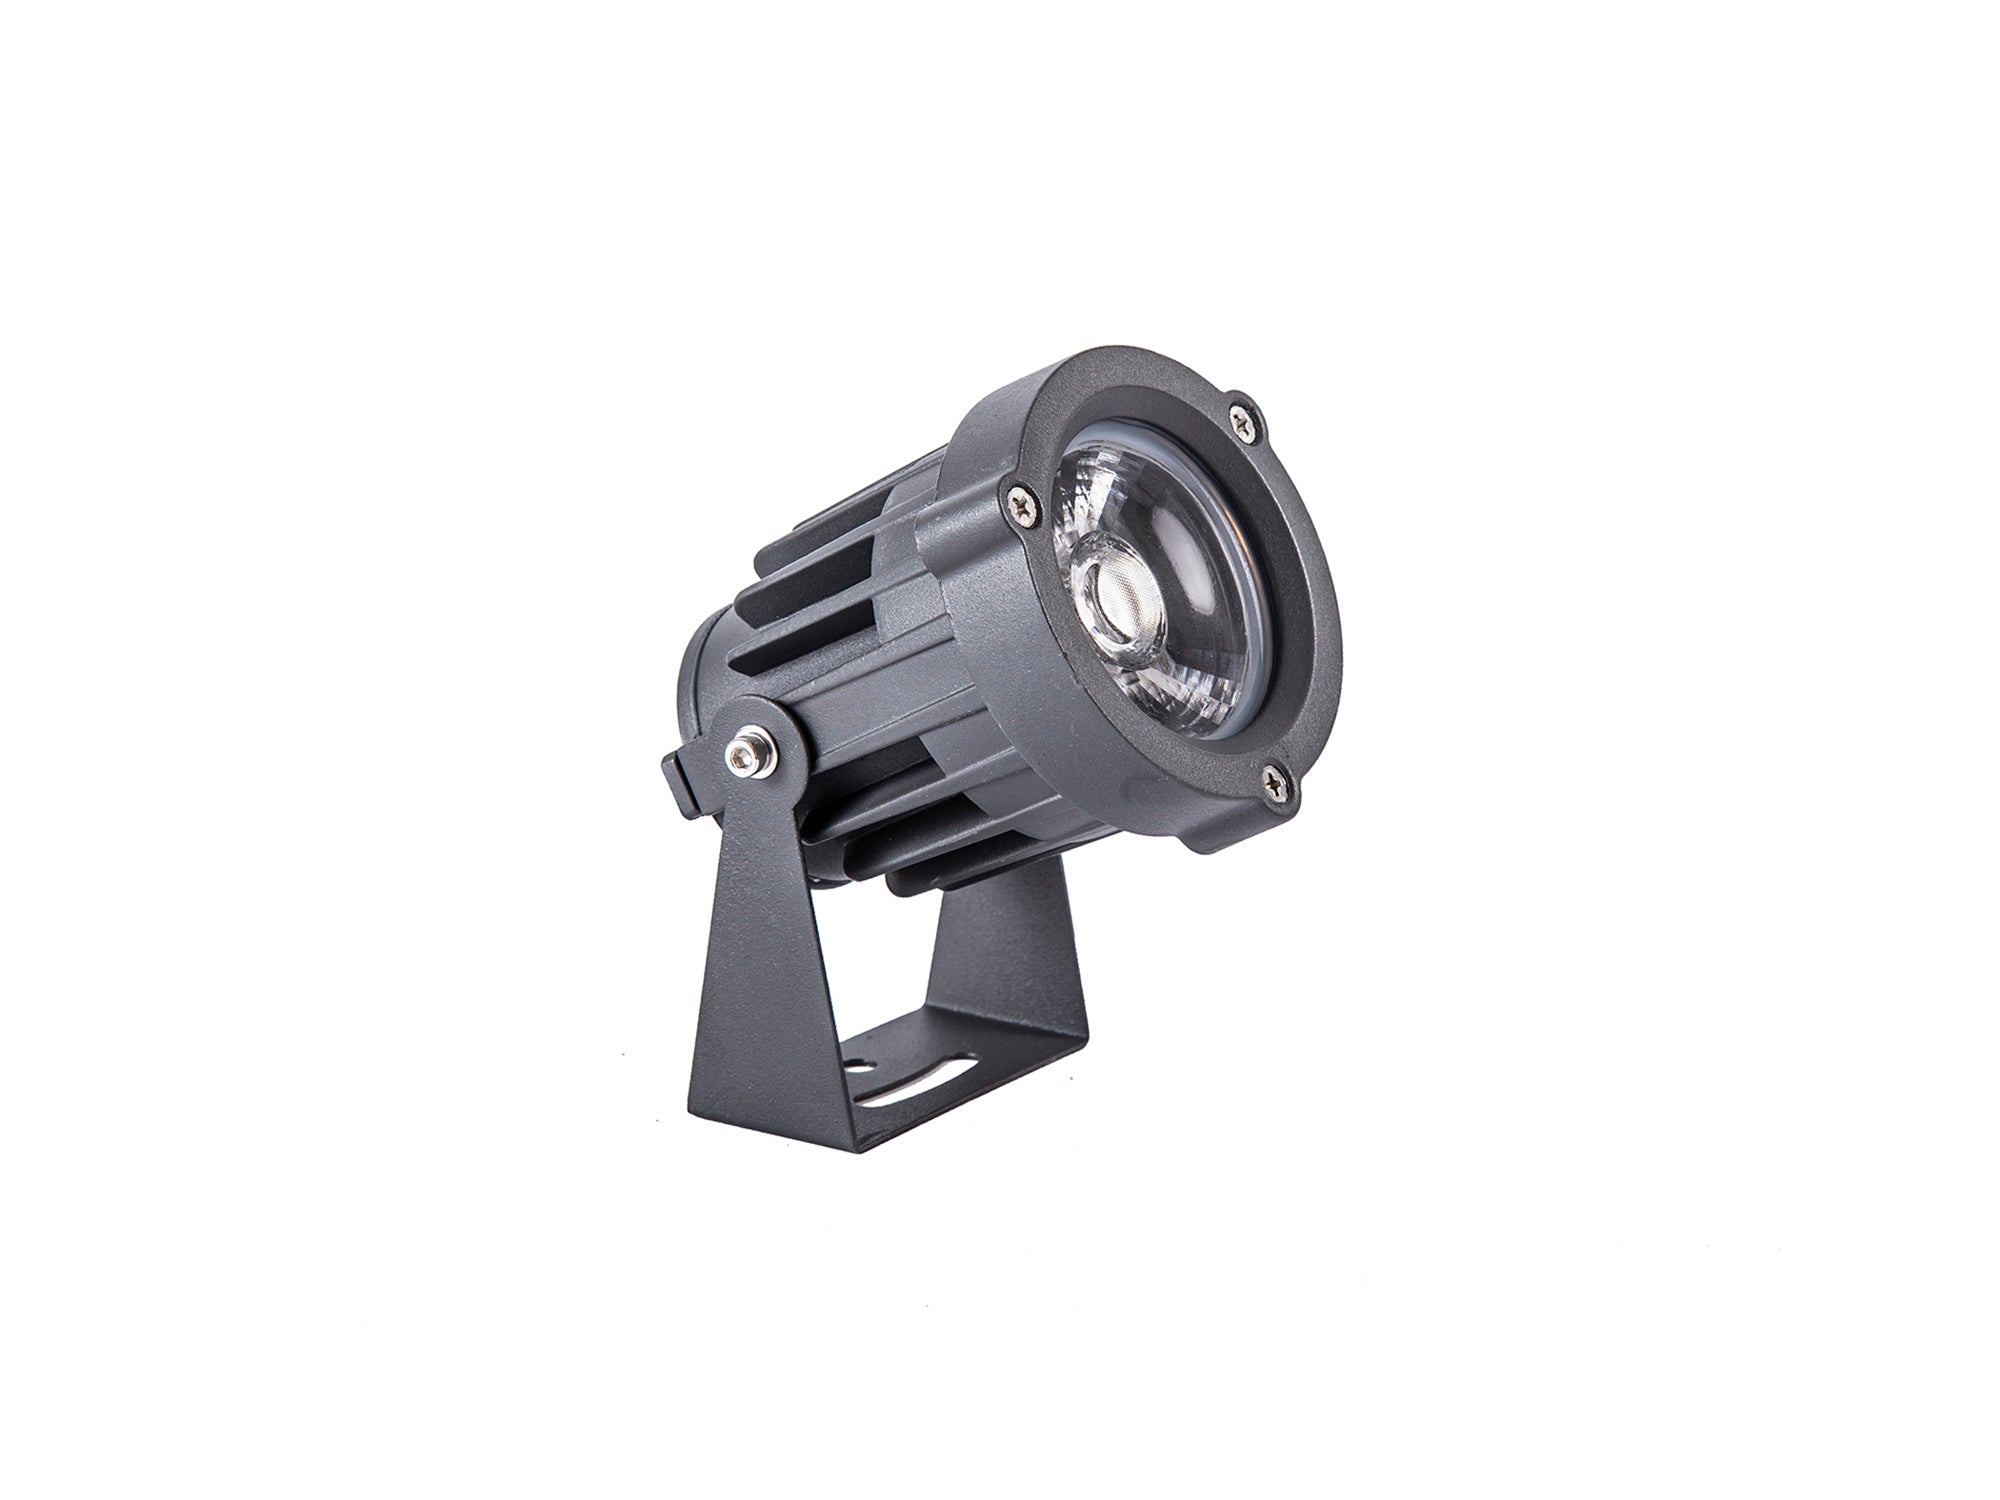 Lightologist Fidel Spike/Wall Light, 1 x 15W LED, 3000K, 1050lm, 30 Degree, IP65, Grey/Black, c/w 2m Cable, 3yrs Warranty LO181773